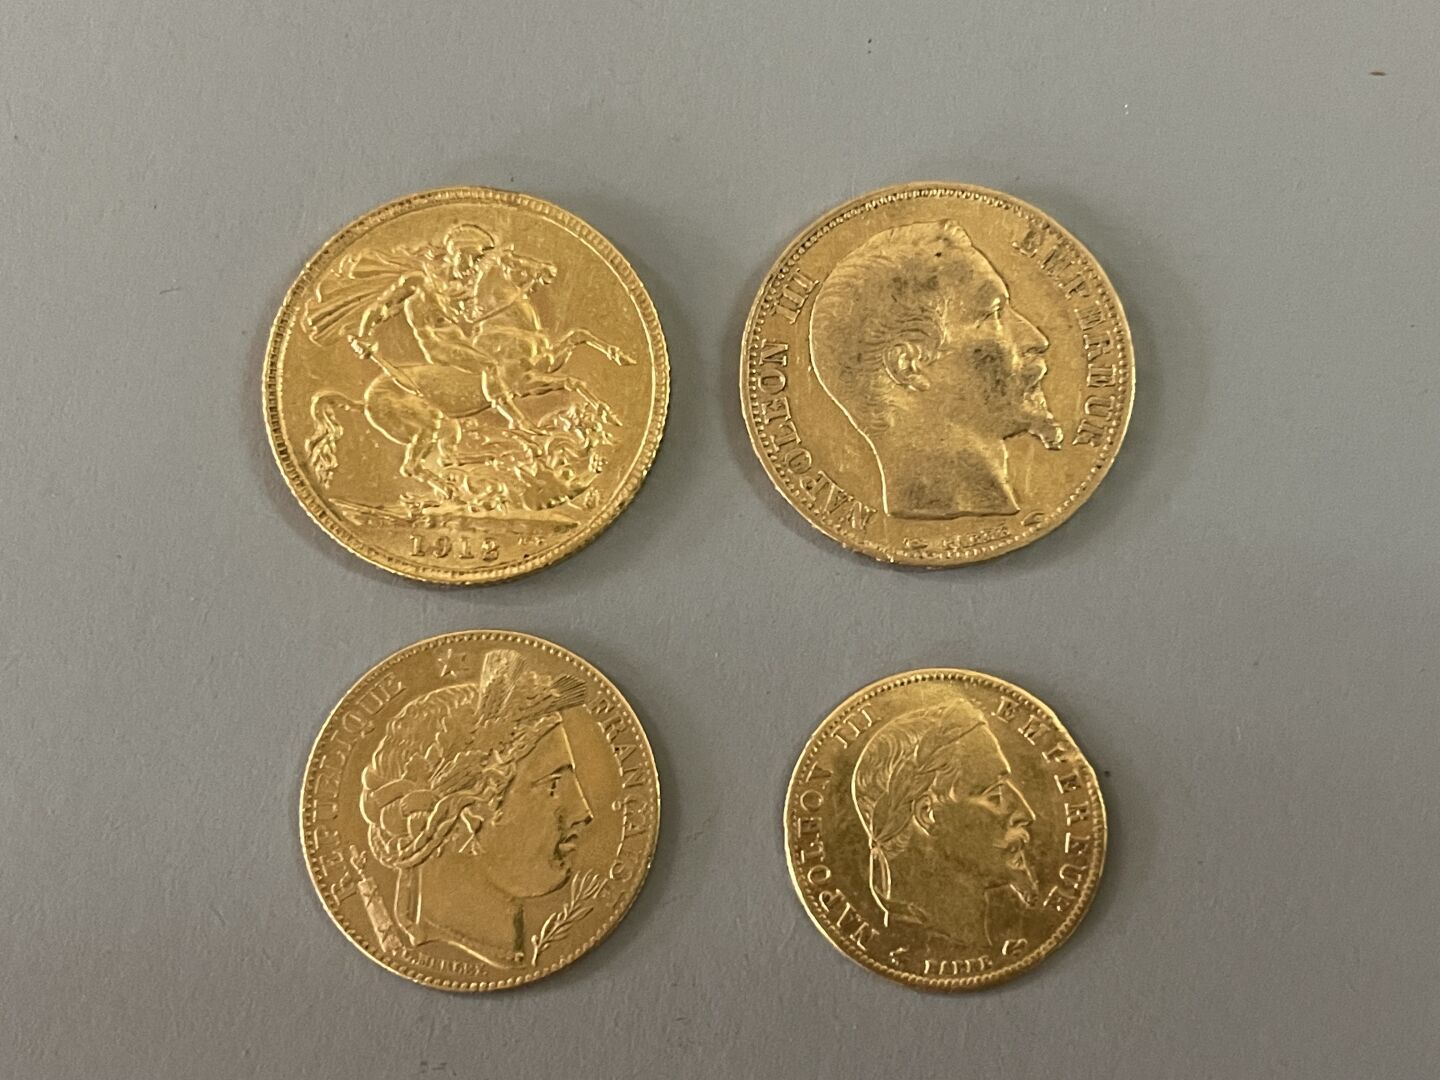 Null Monete d'oro:

- 1 sovrano d'oro 1912

- 1 moneta d'oro da 20 franchi 1853
&hellip;